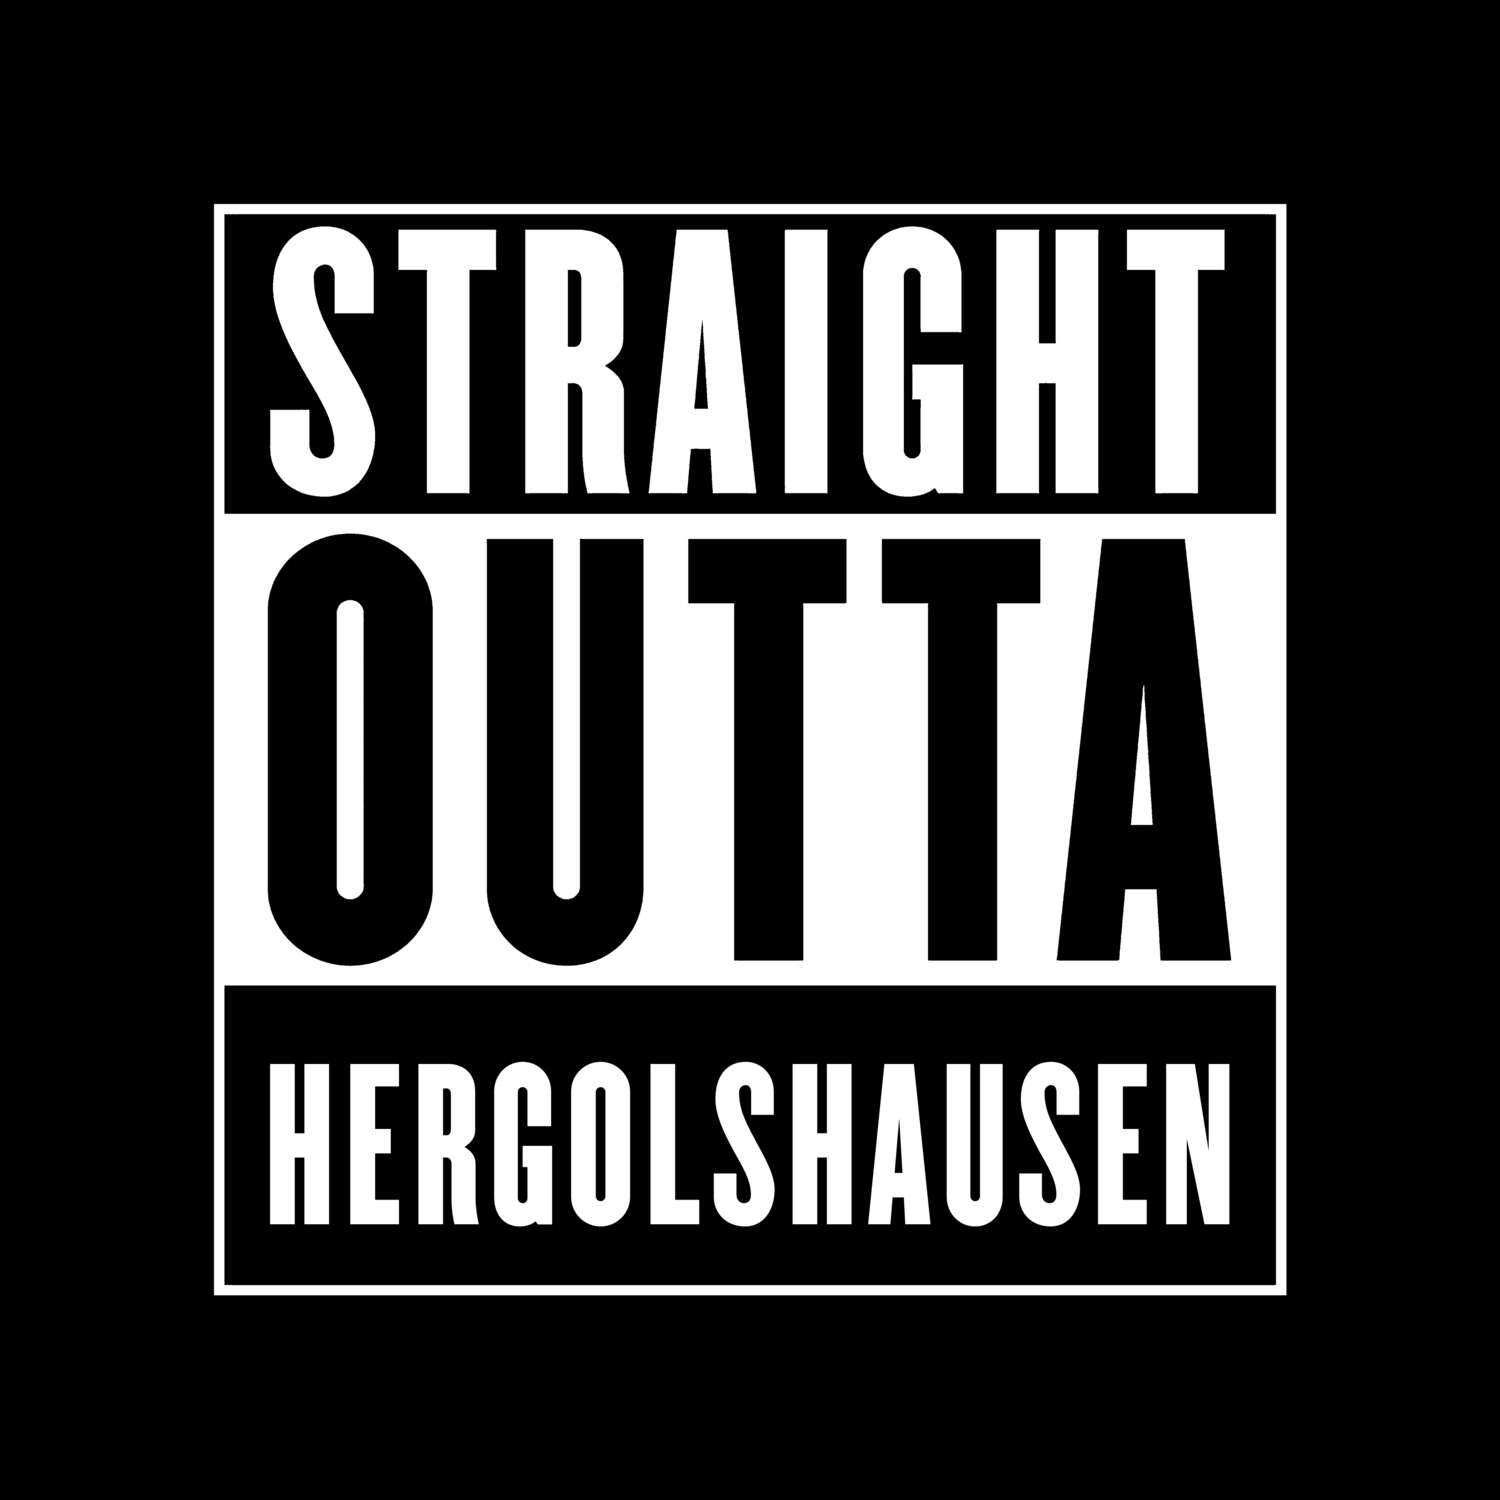 Hergolshausen T-Shirt »Straight Outta«